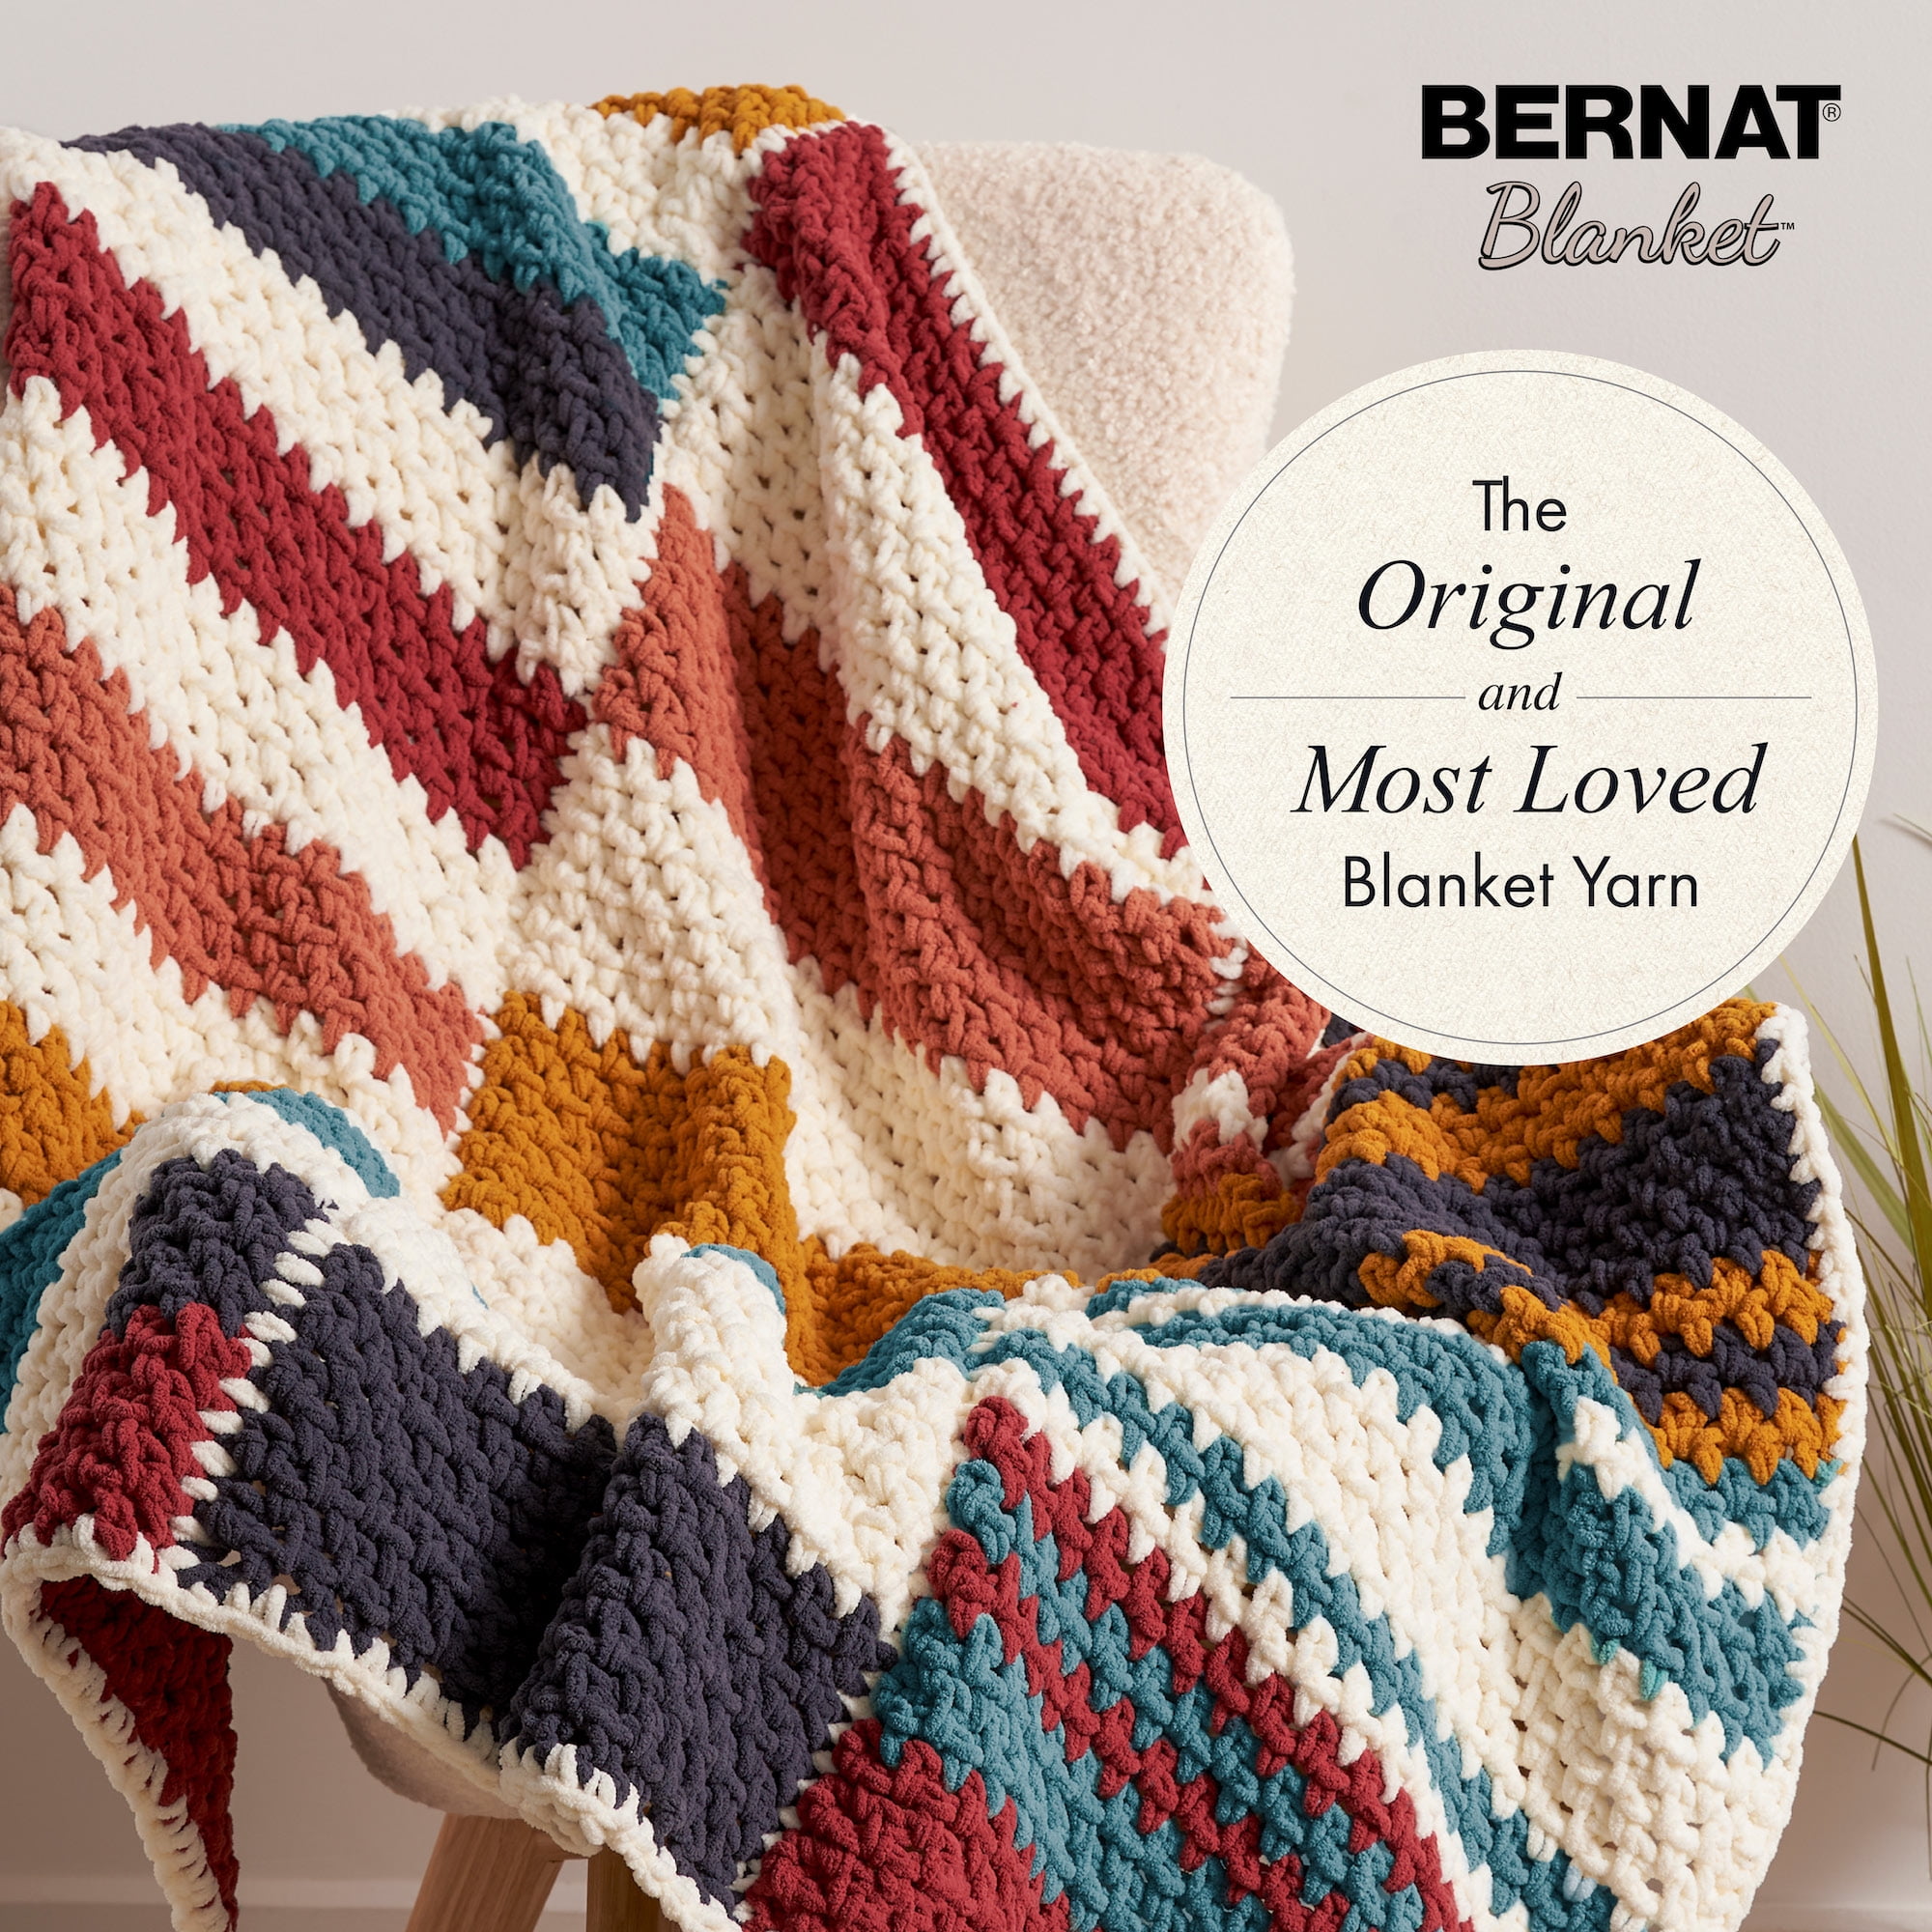  Bernat Blanket Perfect Phasing DEEP Black Cake Yarn - 2 Pack of  10.56oz/299.37g - 100% Polyester - #6 Super Bulky - 220 Yards for Knitting,  Crocheting, Crafts & Amigurumi, Chunky Chenille Yarn : Home & Kitchen